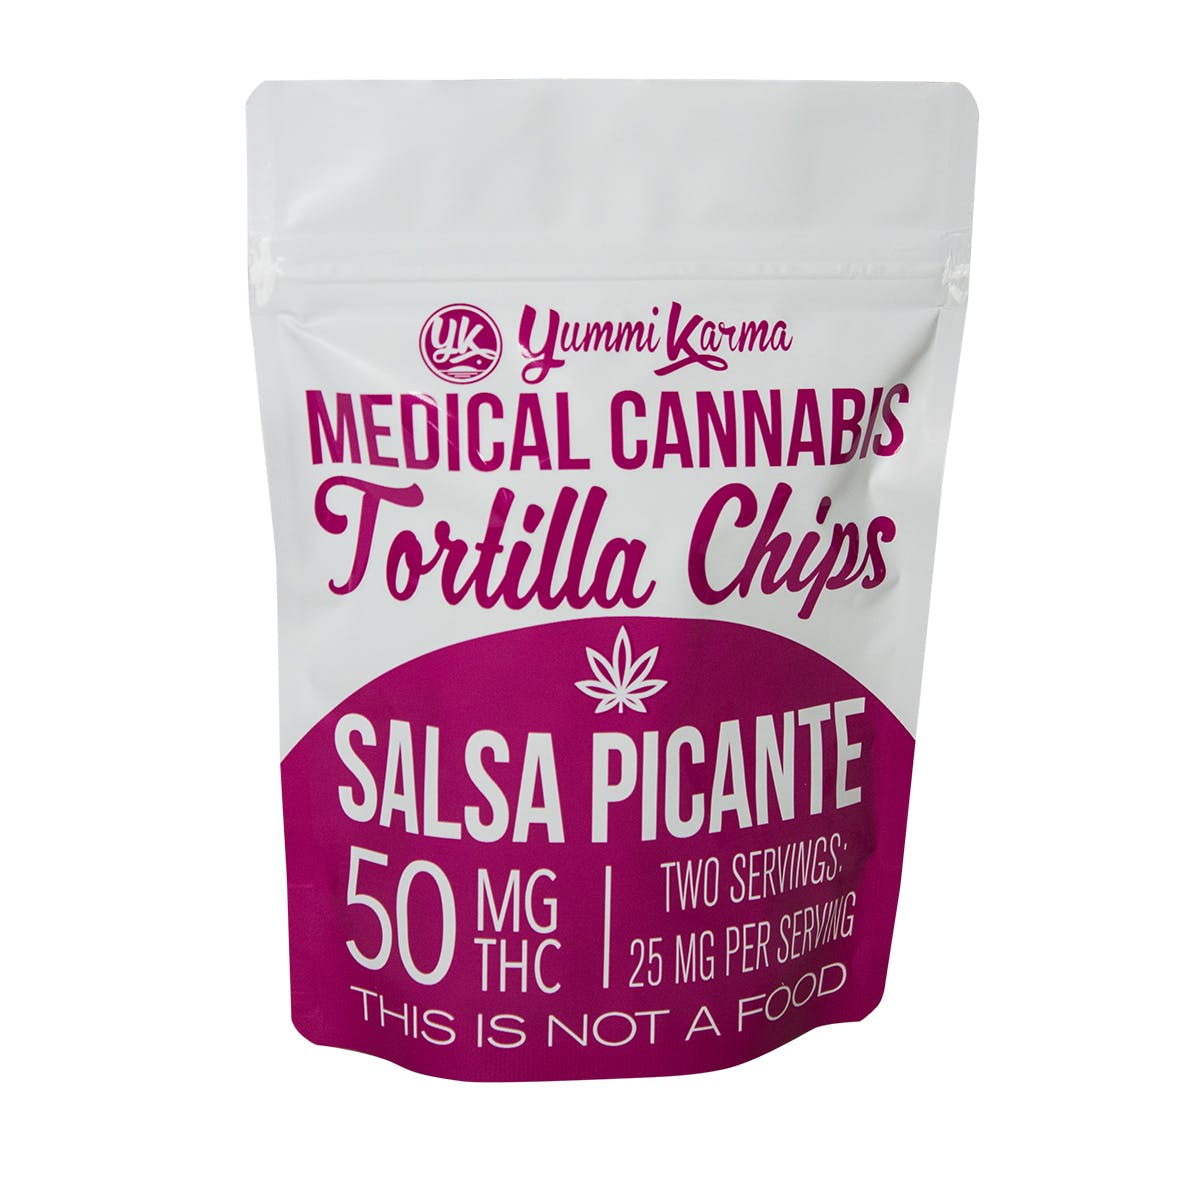 marijuana-dispensaries-natural-healing-remedies-in-bakersfield-medical-cannabis-tortilla-chips-2c-salsa-picante